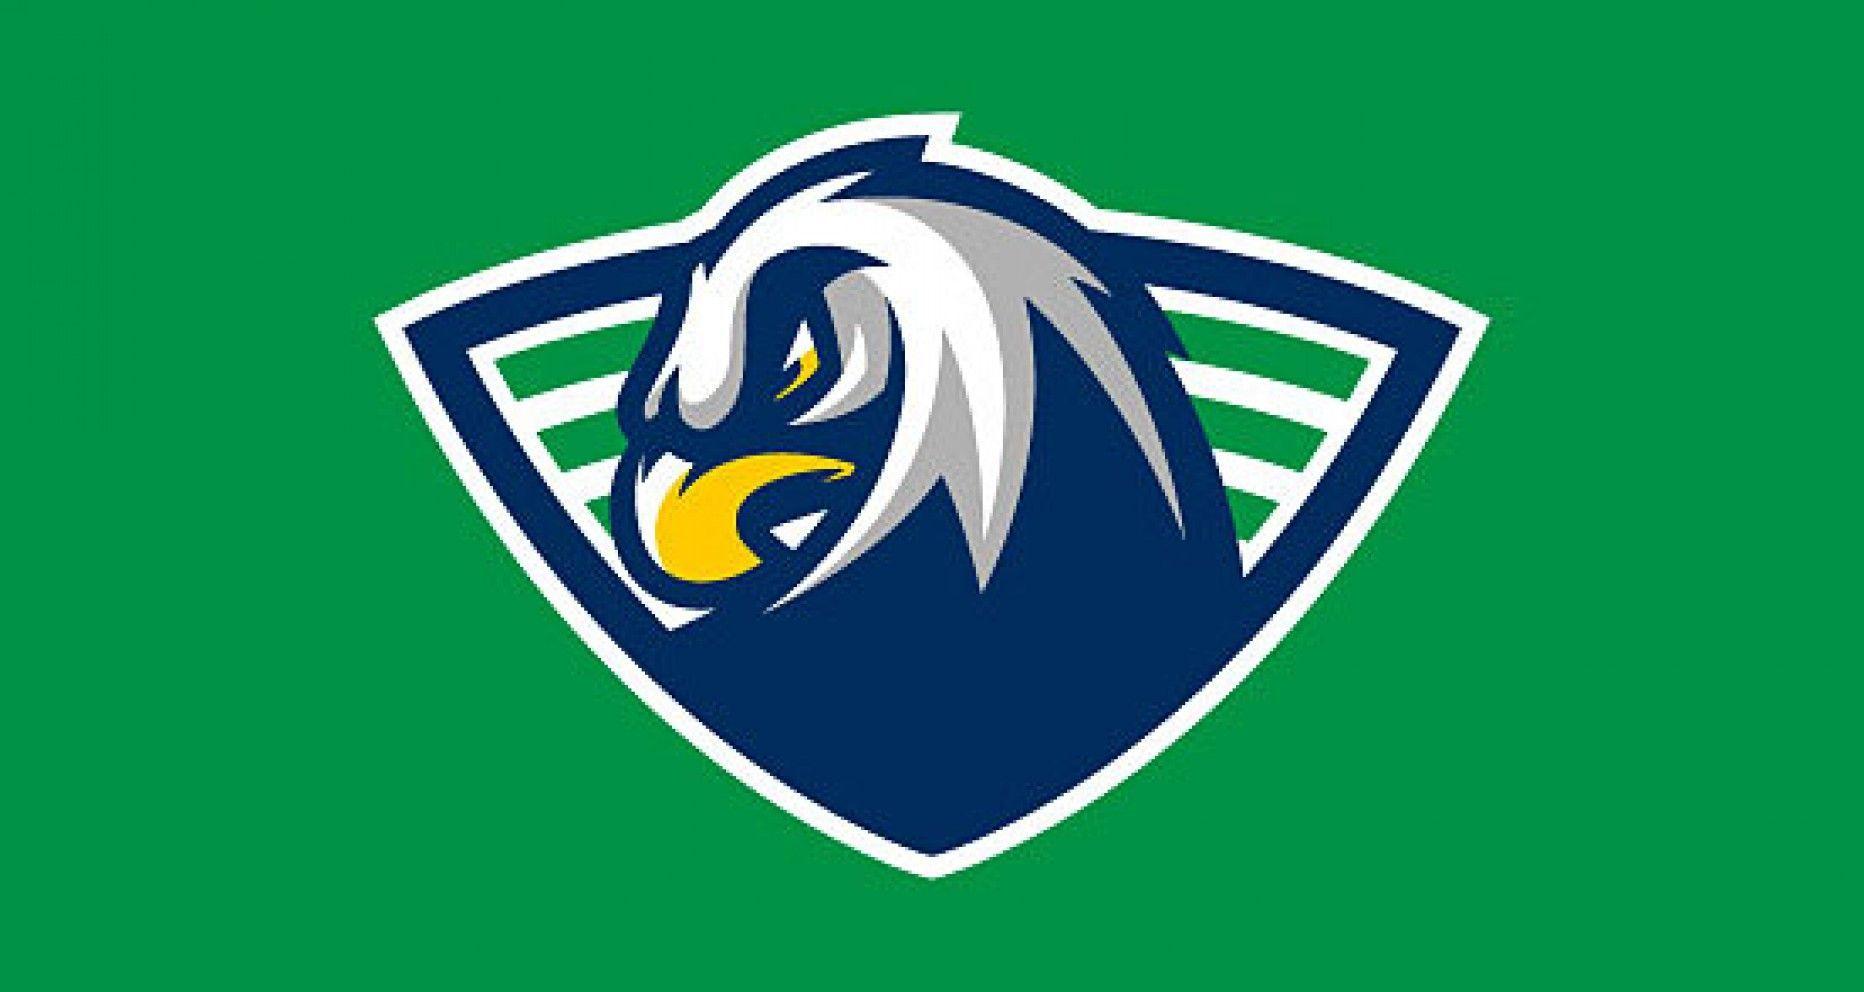 Cool Eagle Logo - Eagles Revision | Sports Logos | Pinterest | Logos, Eagles and ...